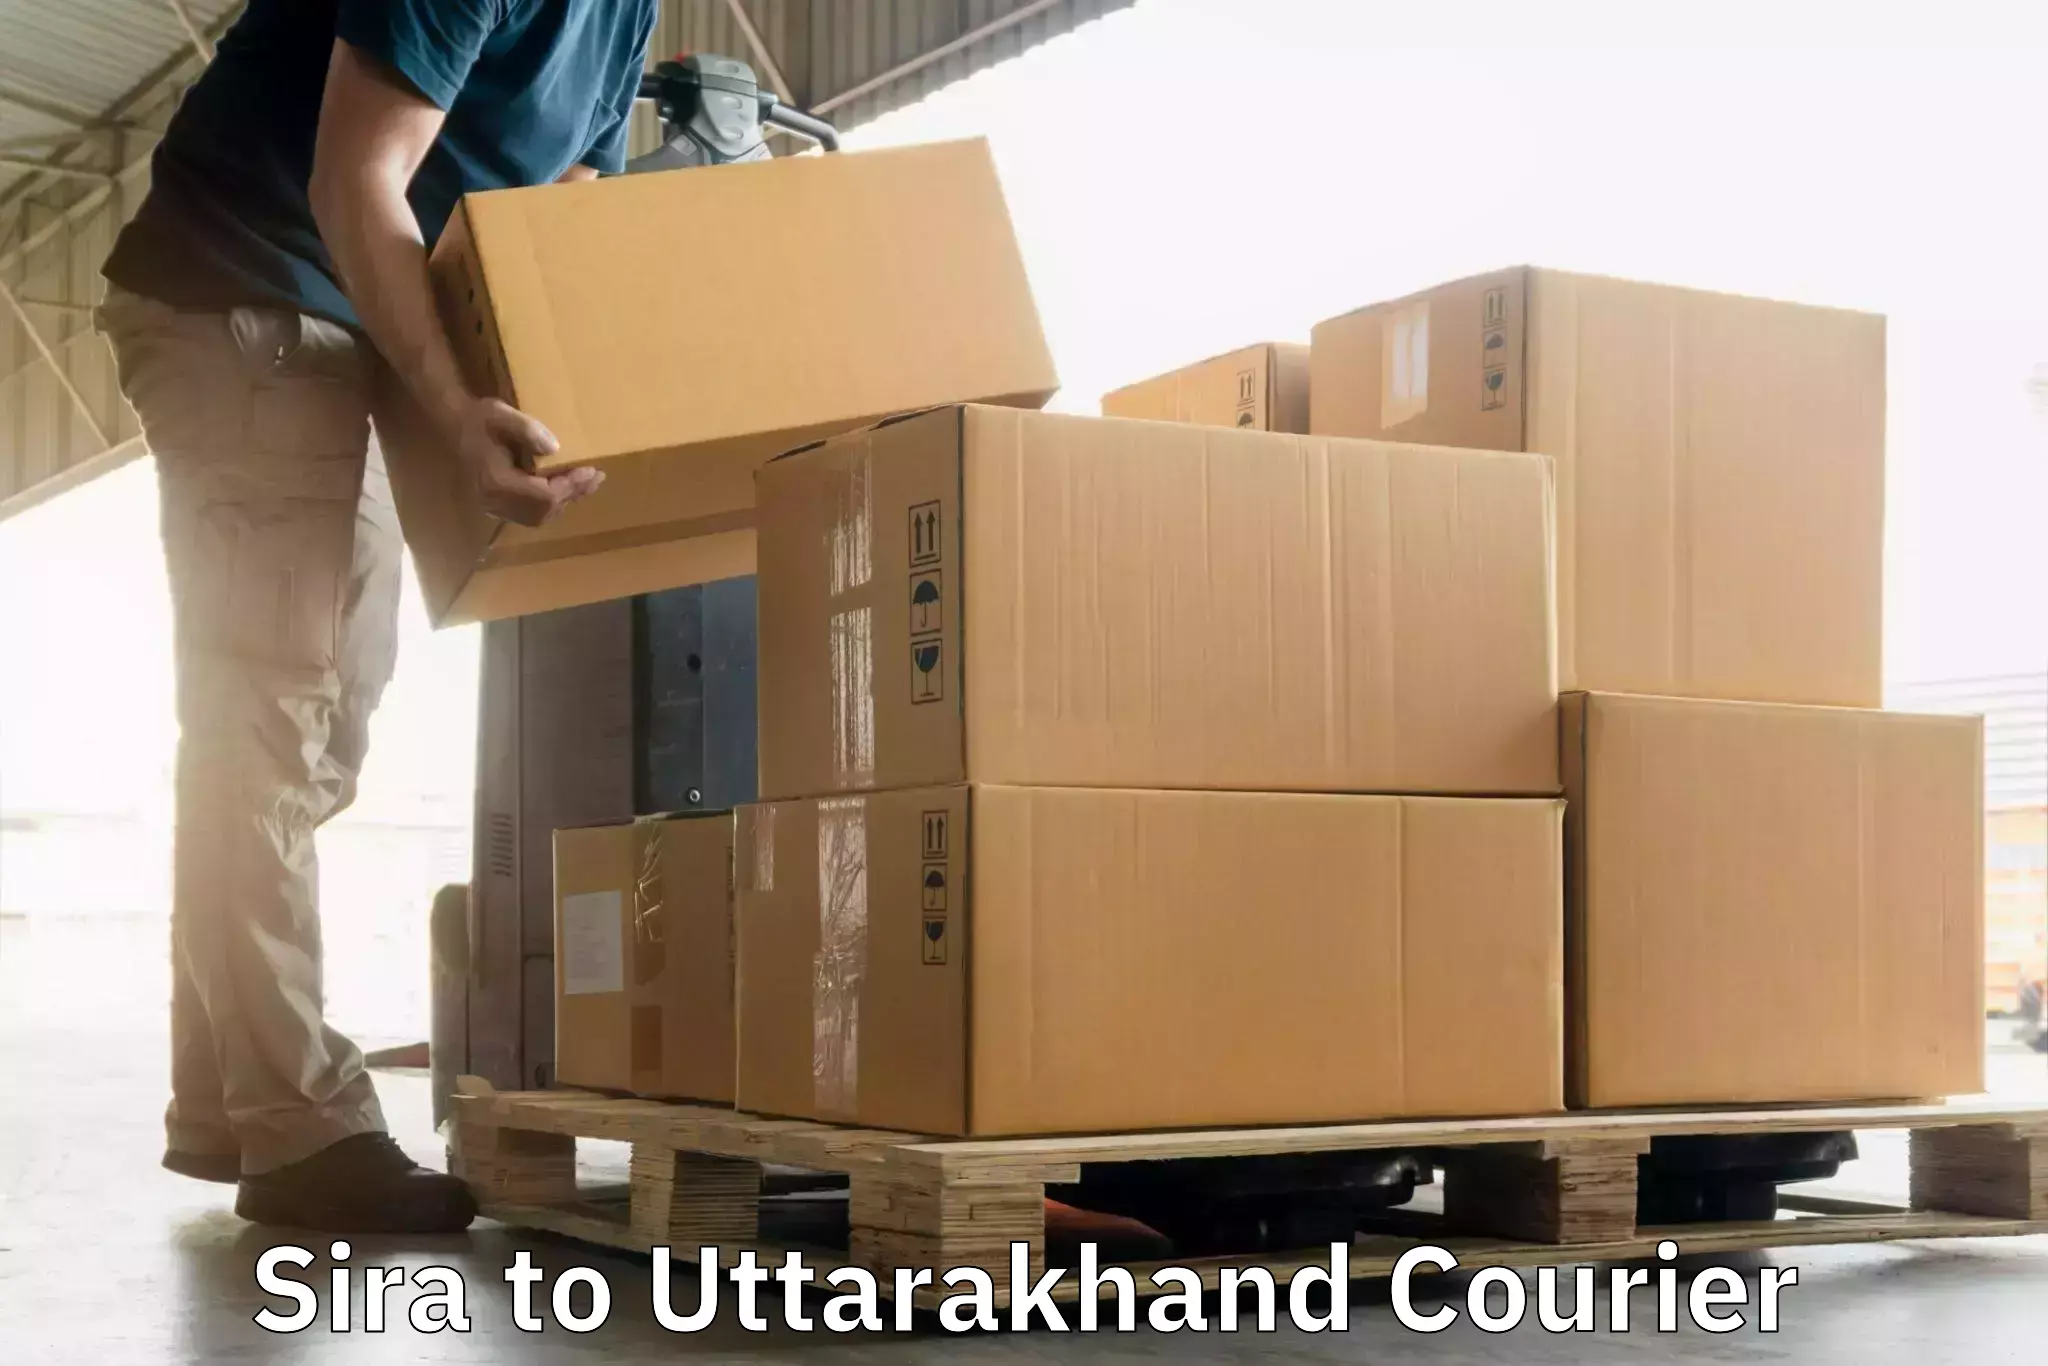 Express mail service Sira to Uttarakhand